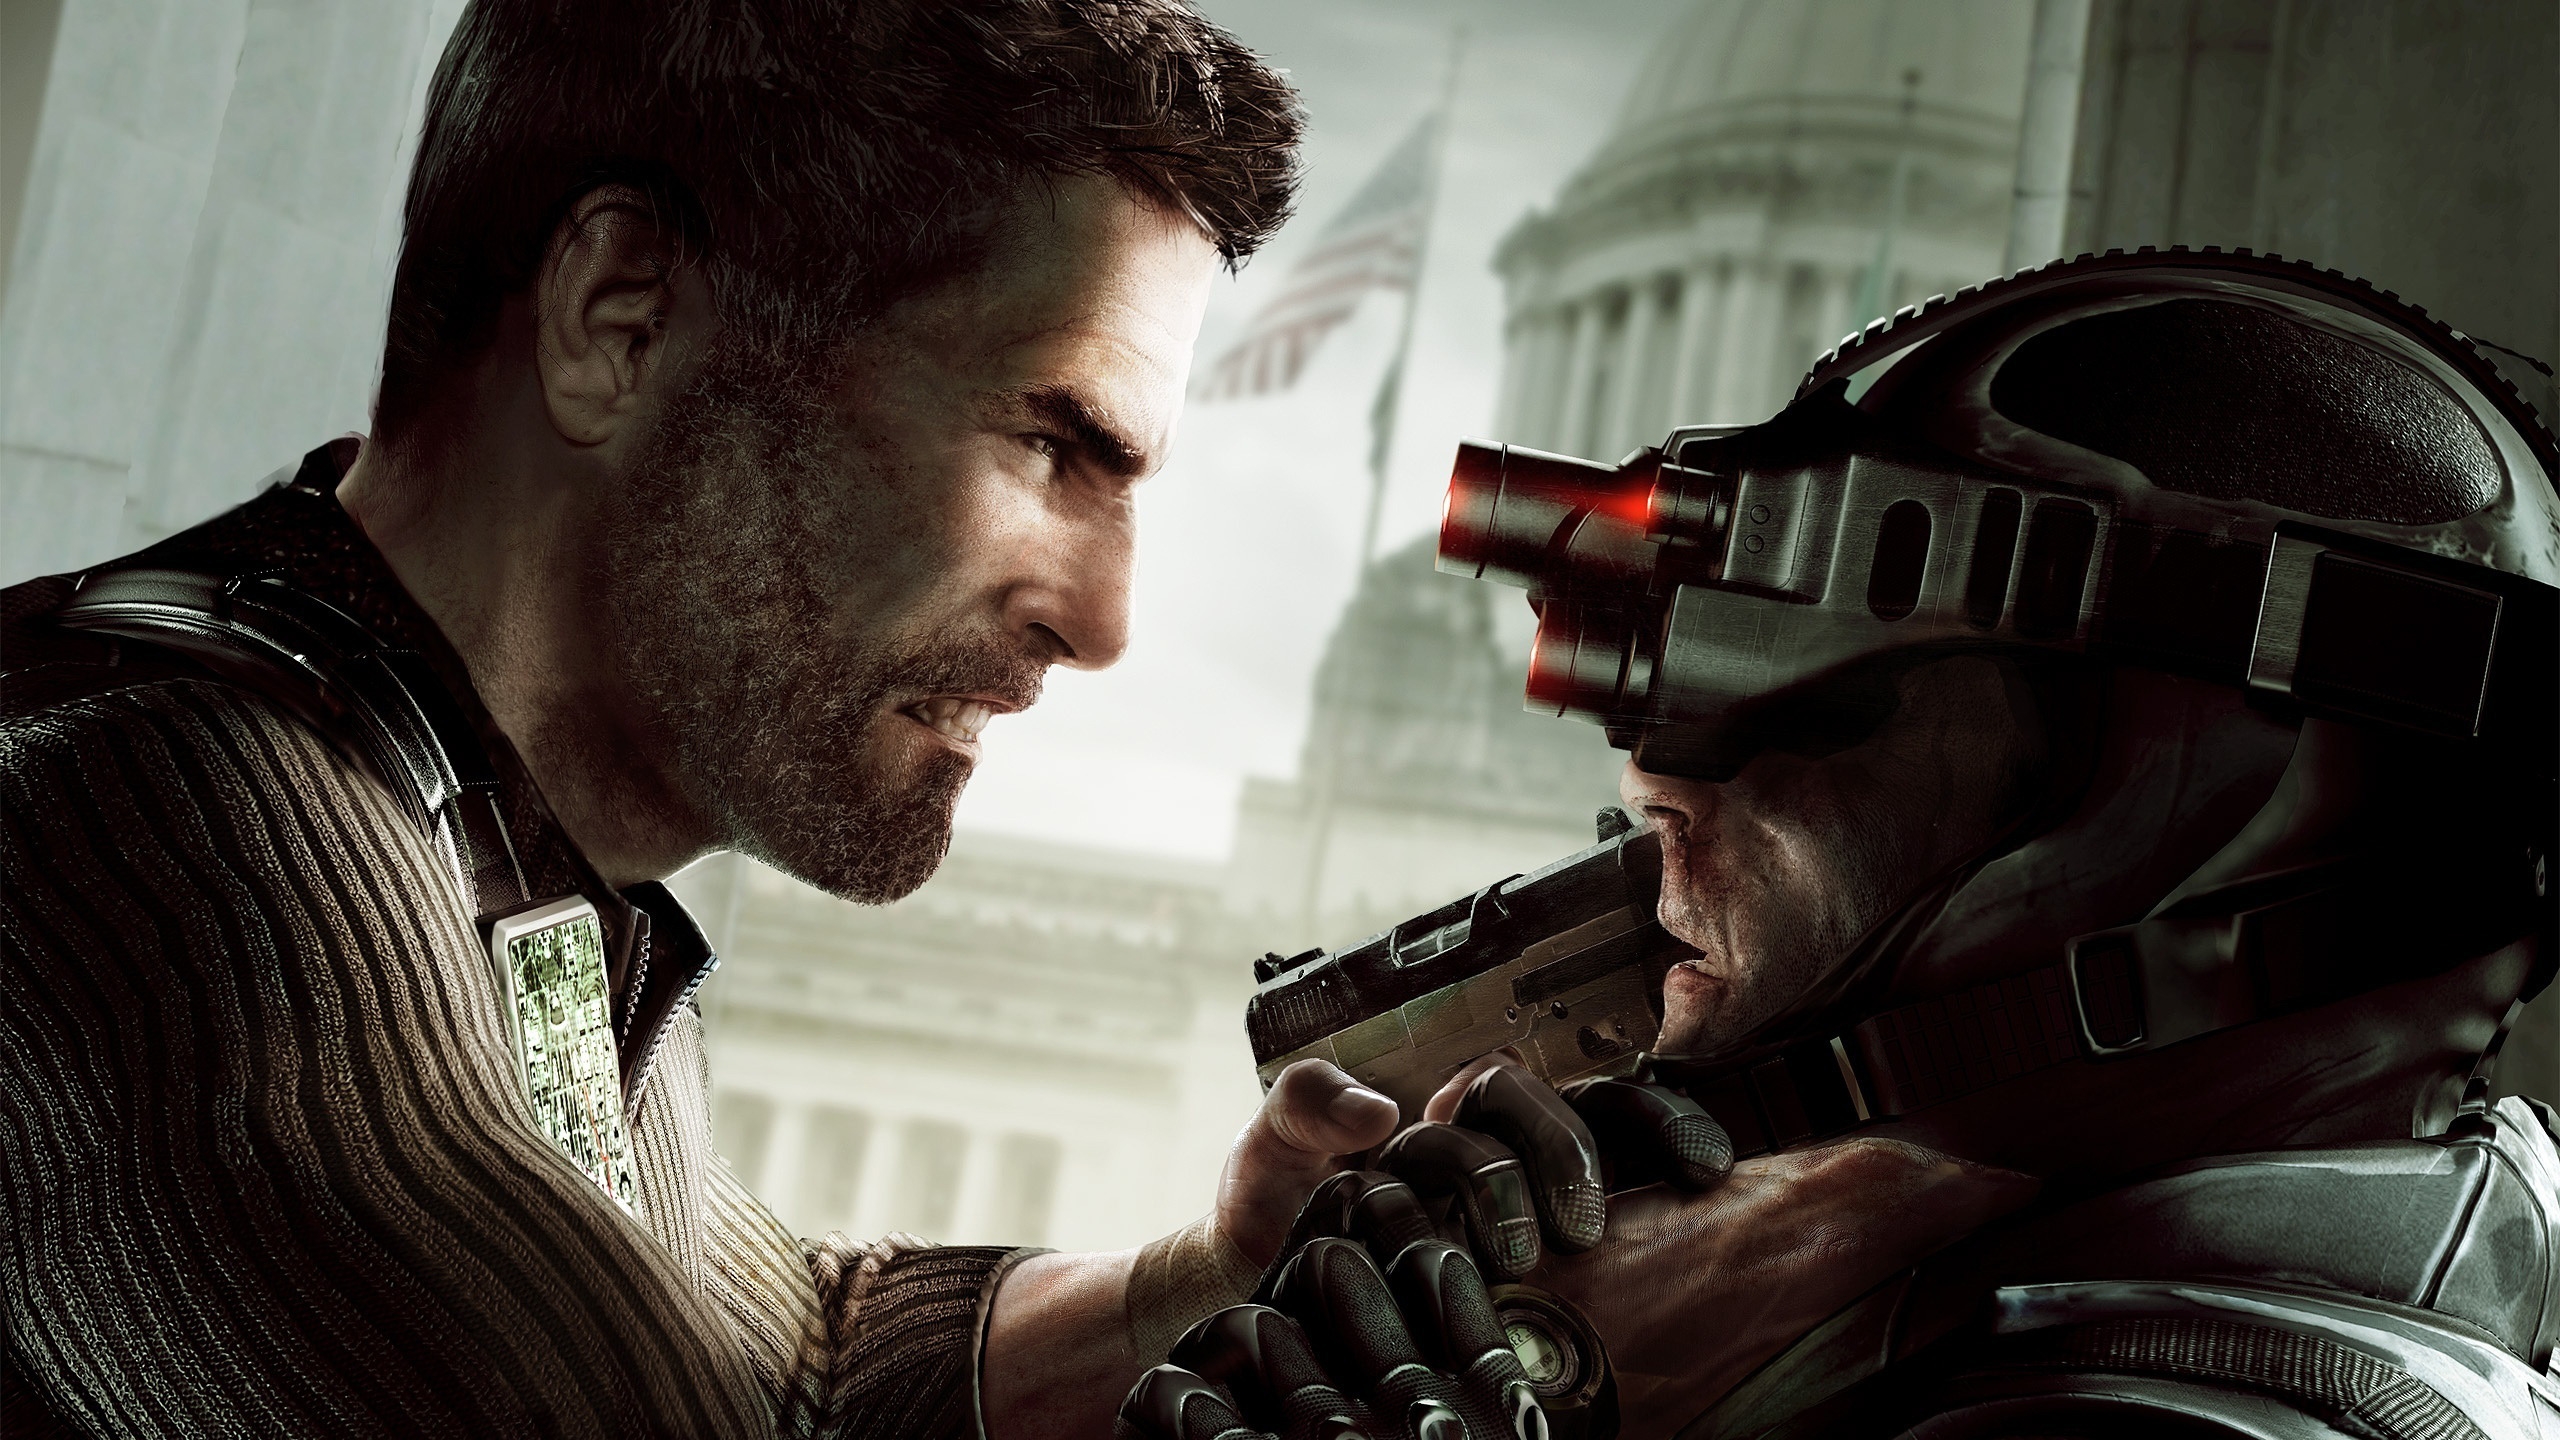 Tom Clancy Splinter Cell Conviction for 2560x1440 HDTV resolution